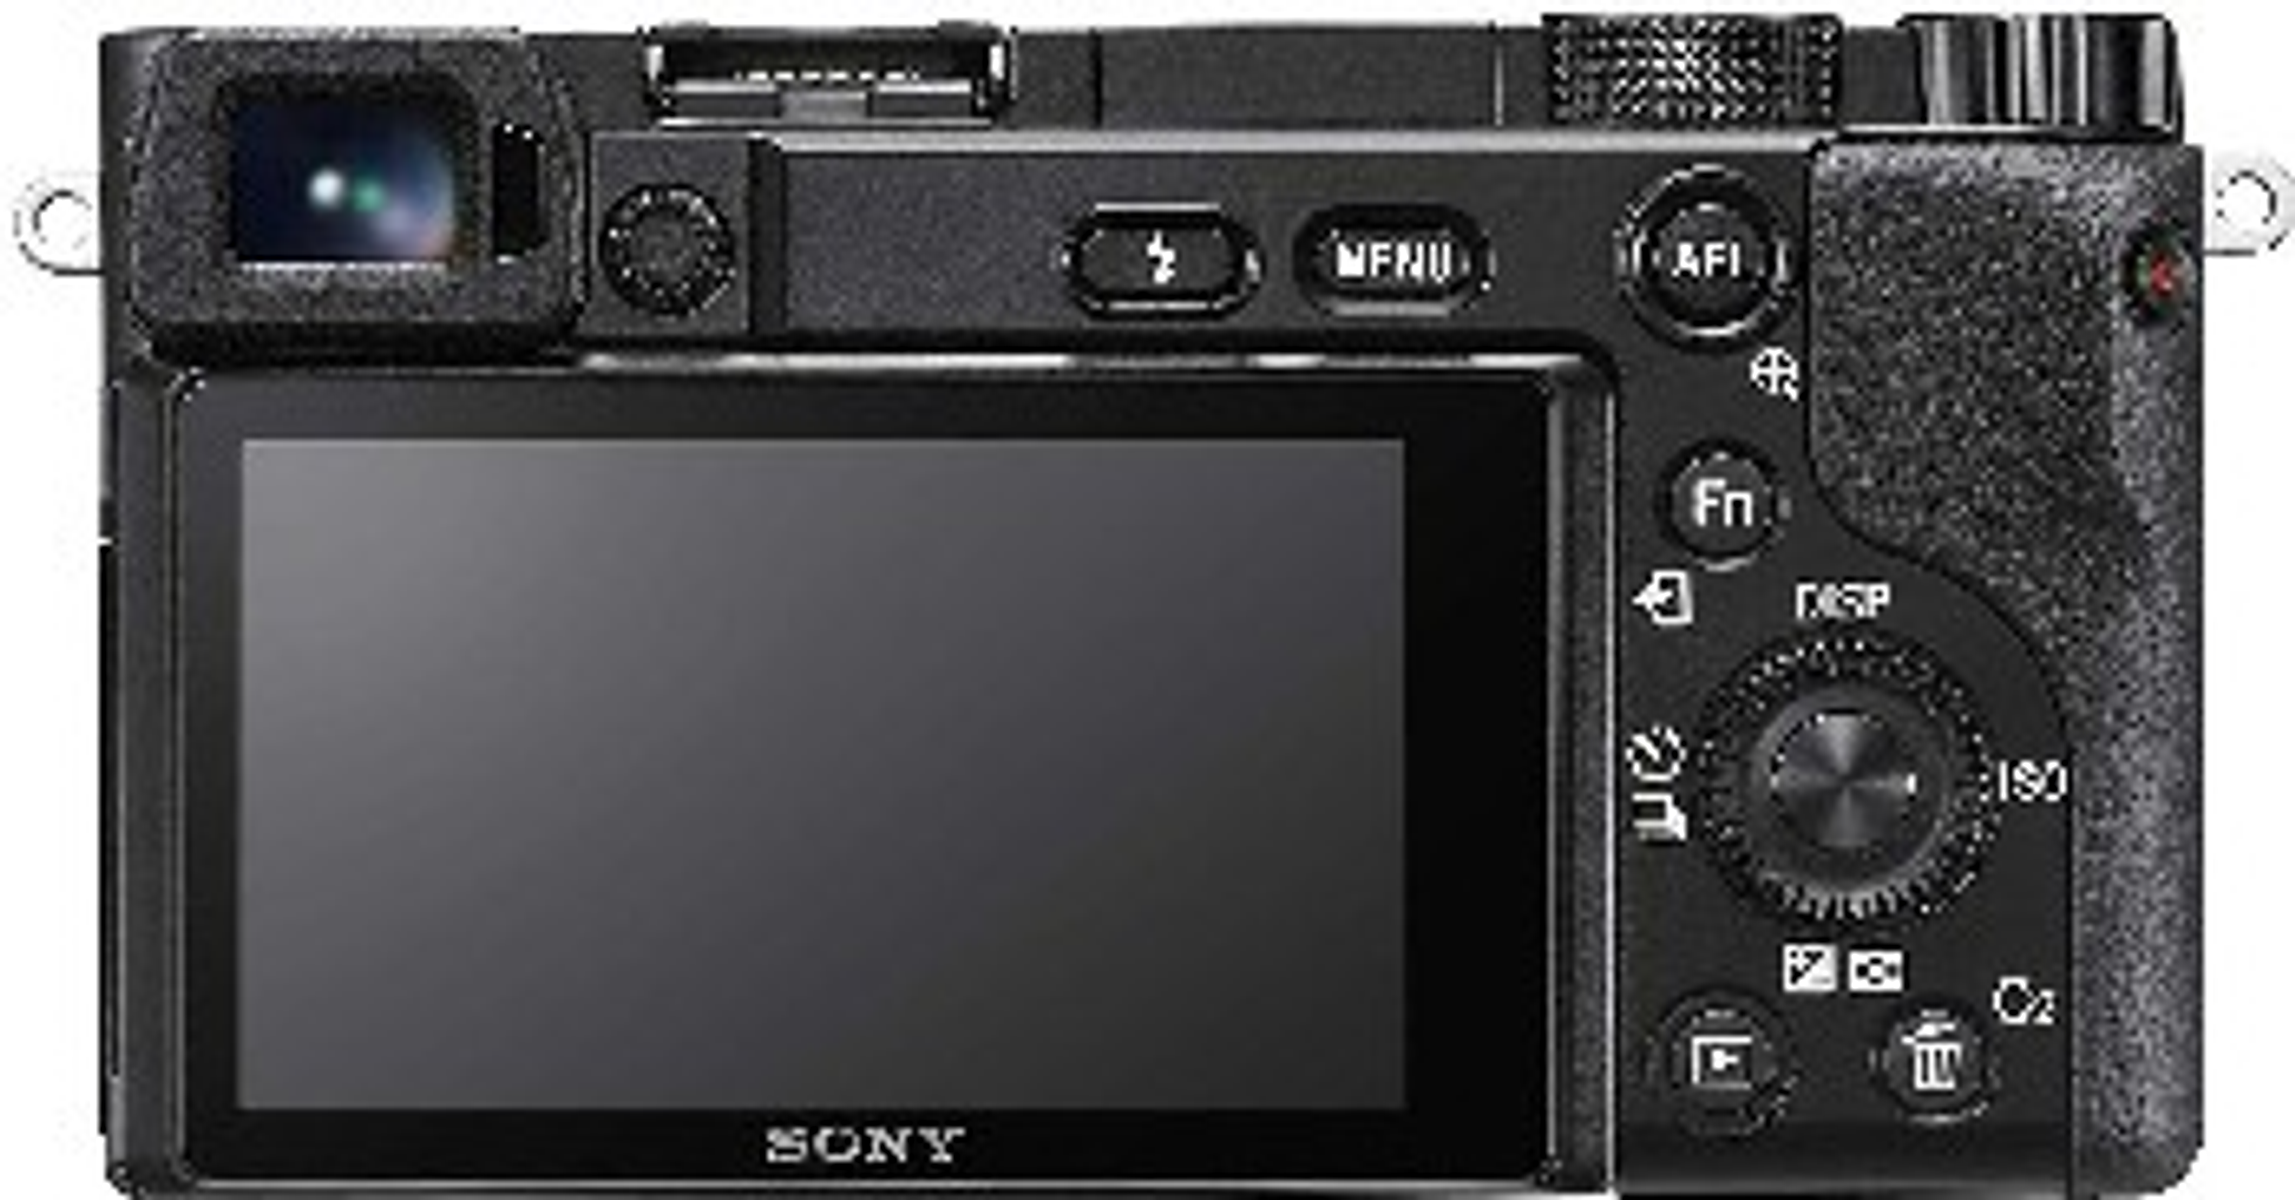 Display 6100 SONY , ALPHA B Touchscreen, Systemkamera WLAN 7,5 BODY SCHWARZ cm